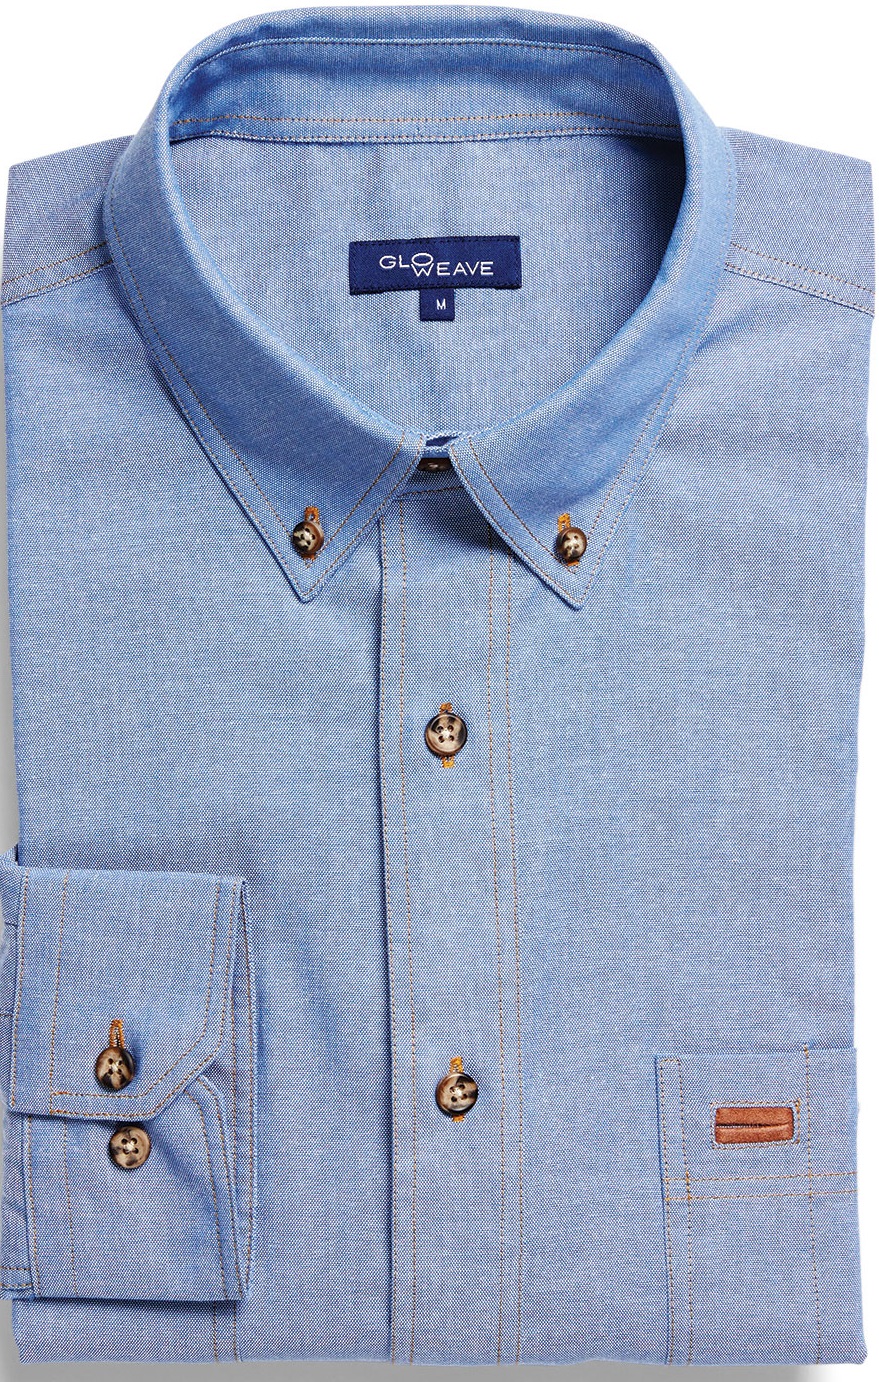 Gloweave Iconic Style 5045 - Chambray Shirts Long Sleeve